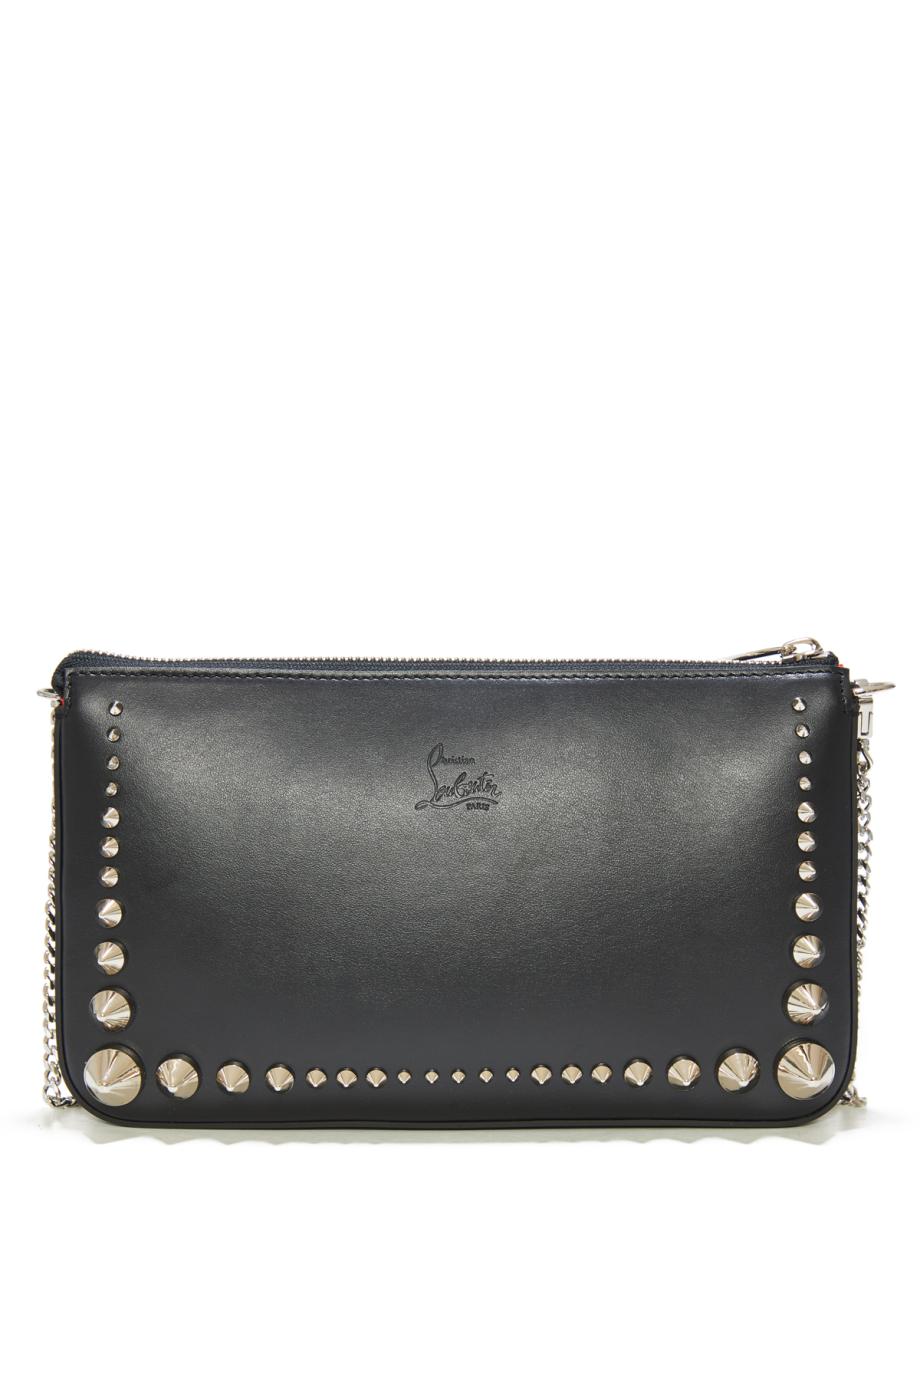 Loubila embellished leather clutch 